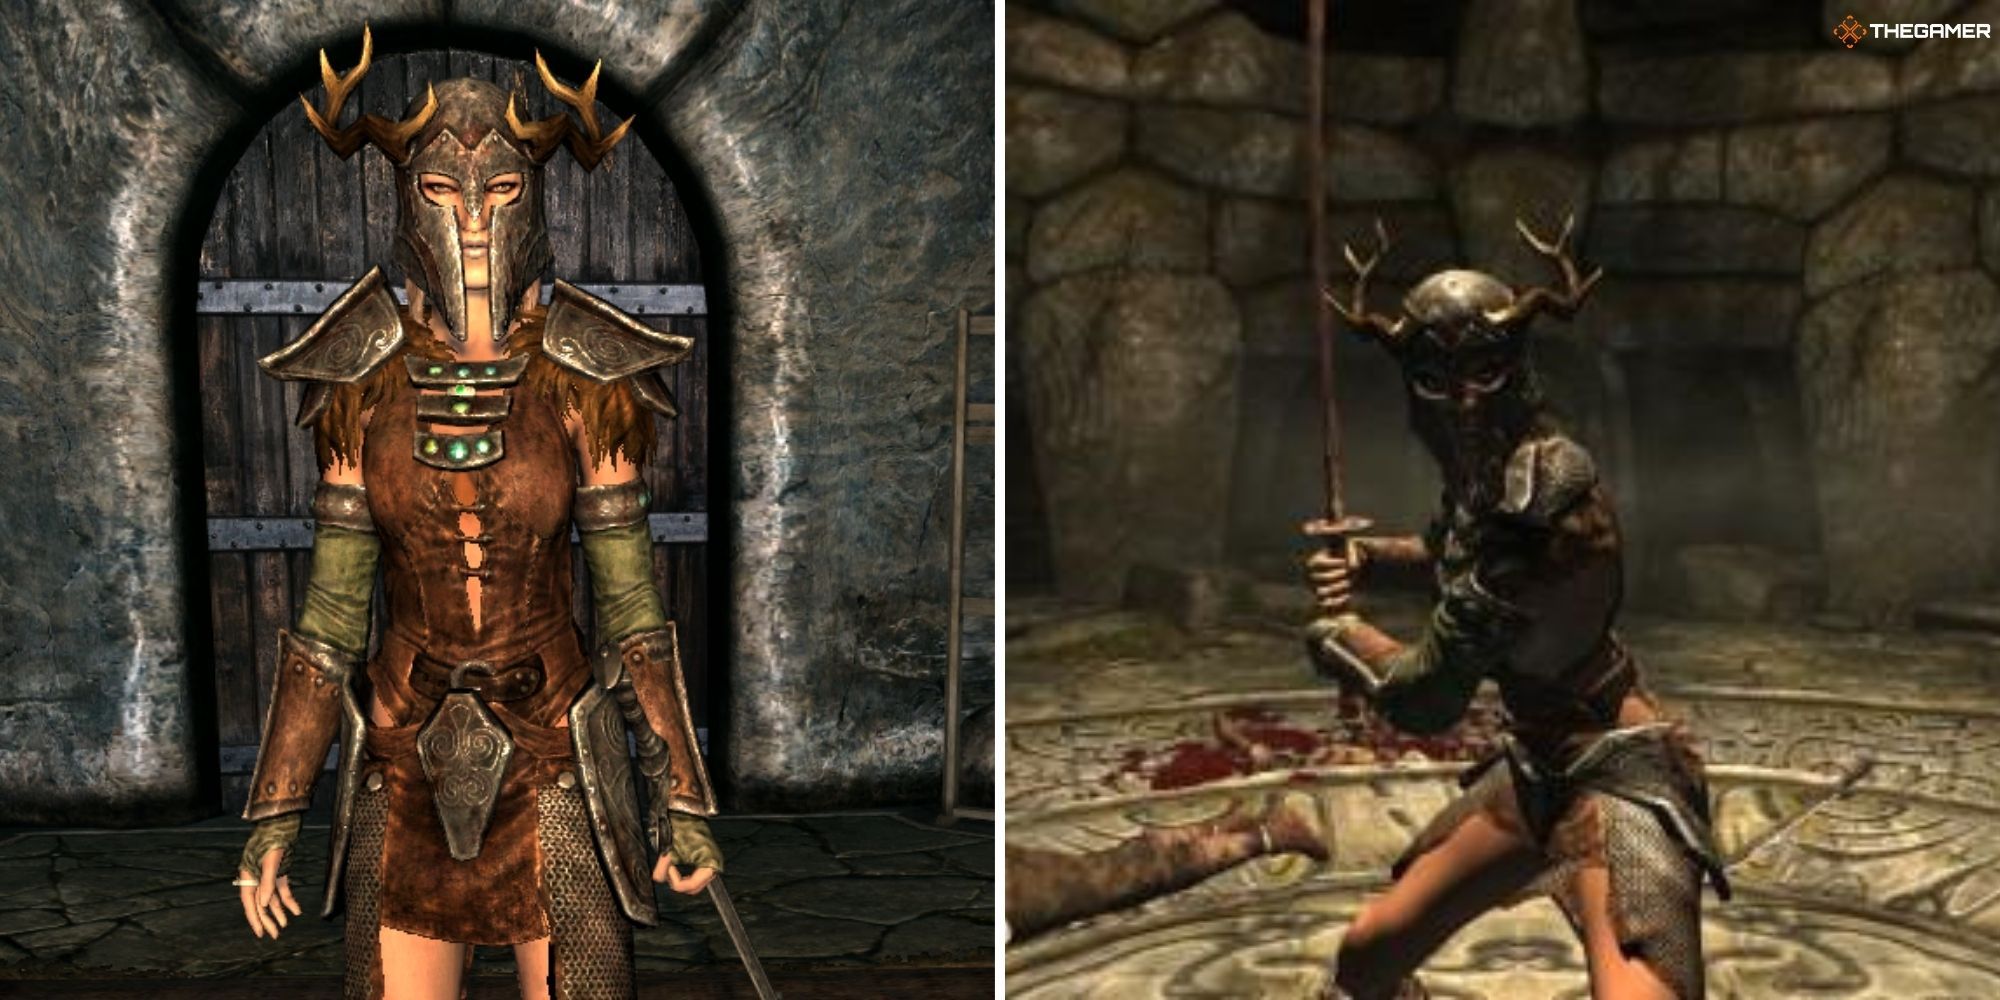 Skyrim - Ahzidals Armor worn by the player, split image